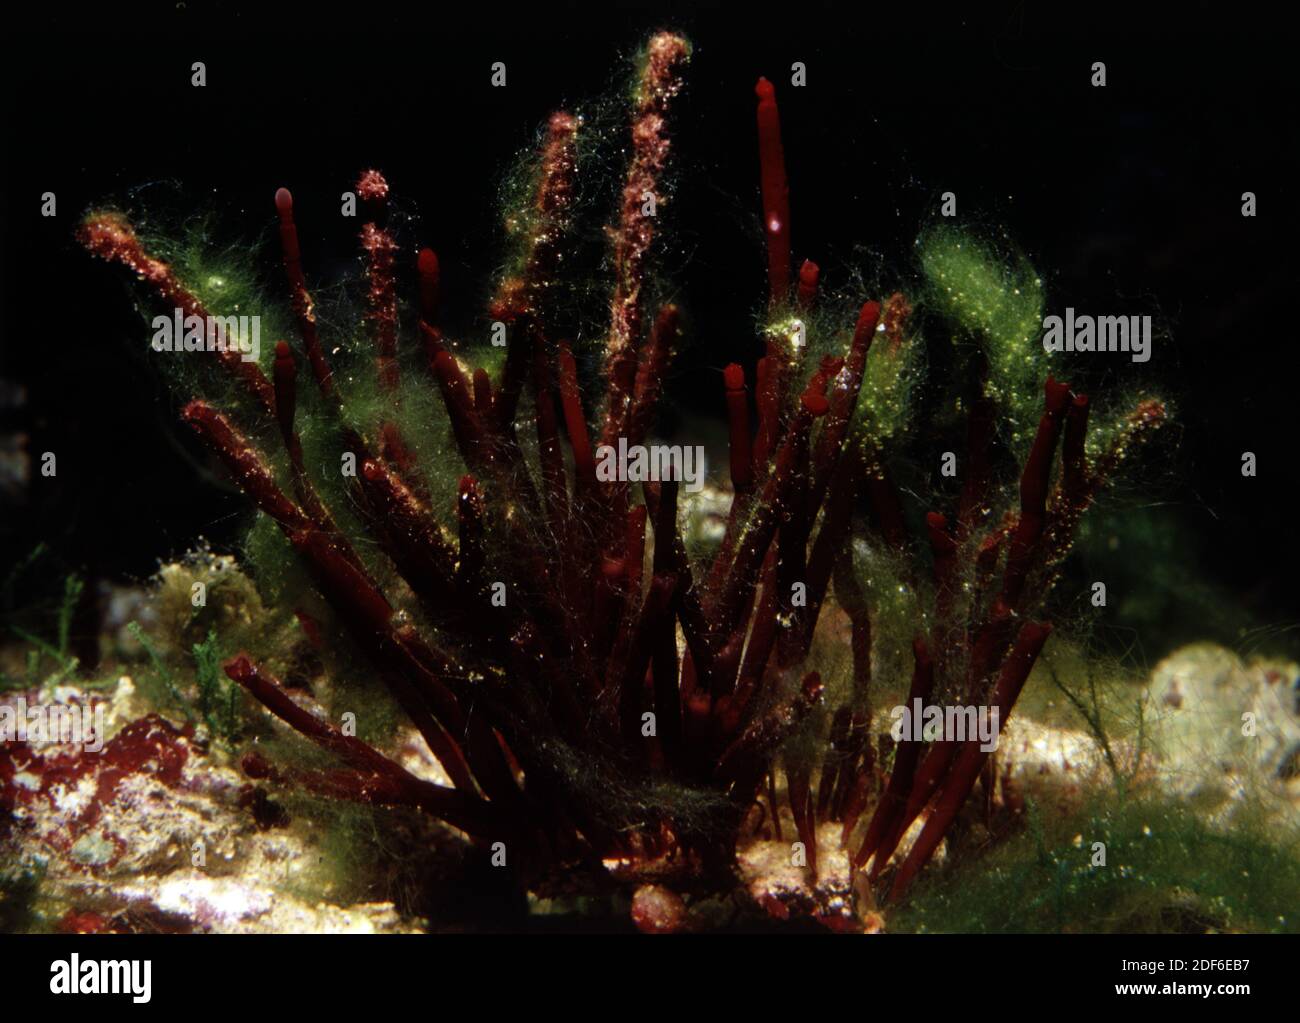 Green invasiva algae on marine red alga Amphiroa sp. Stock Photo